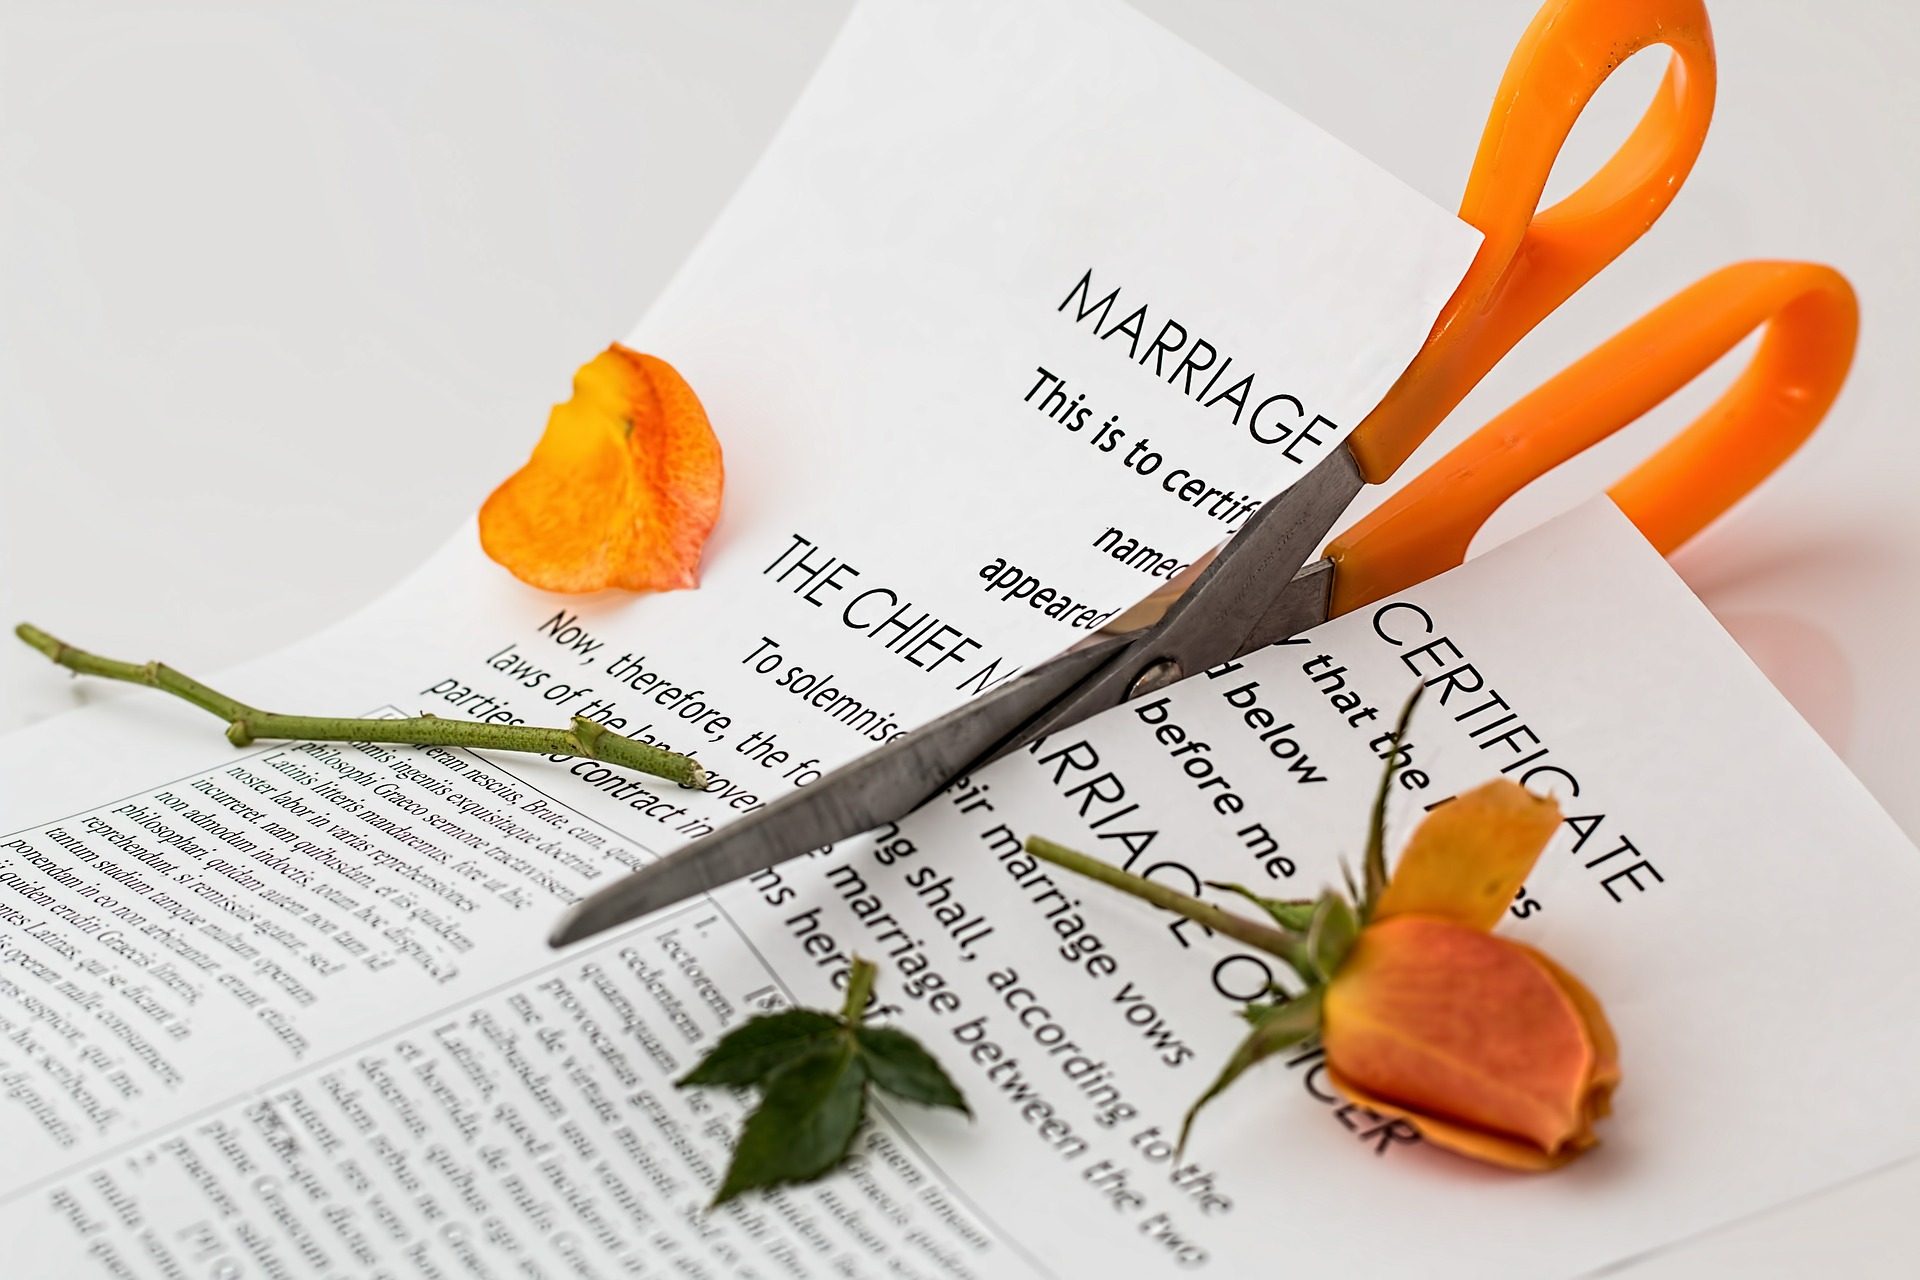 Divorce: Marriage contract cut with orange scissors, rose